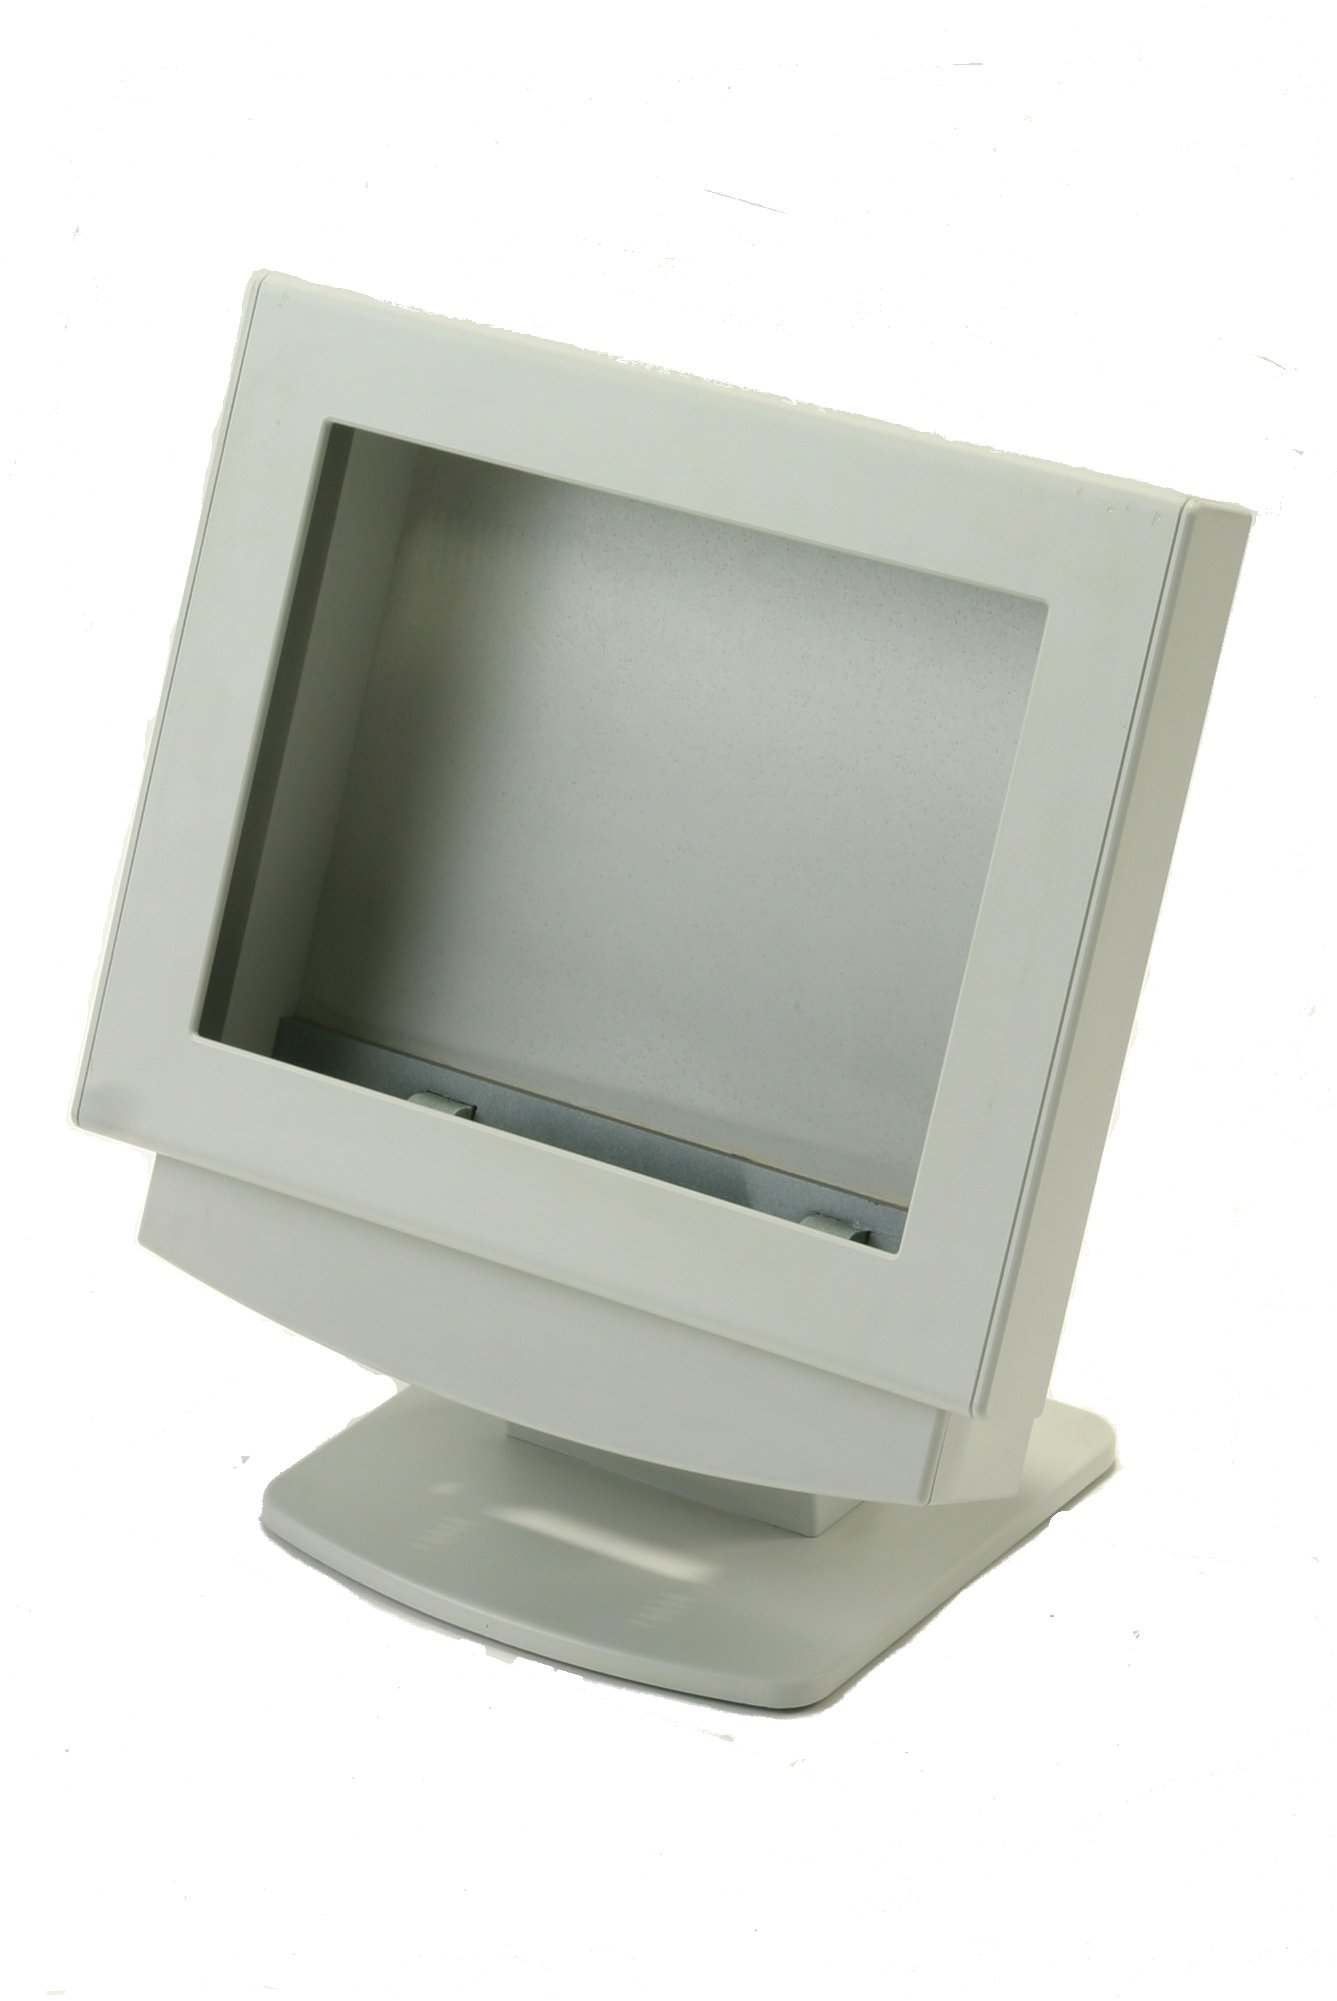 White LCD Monitor